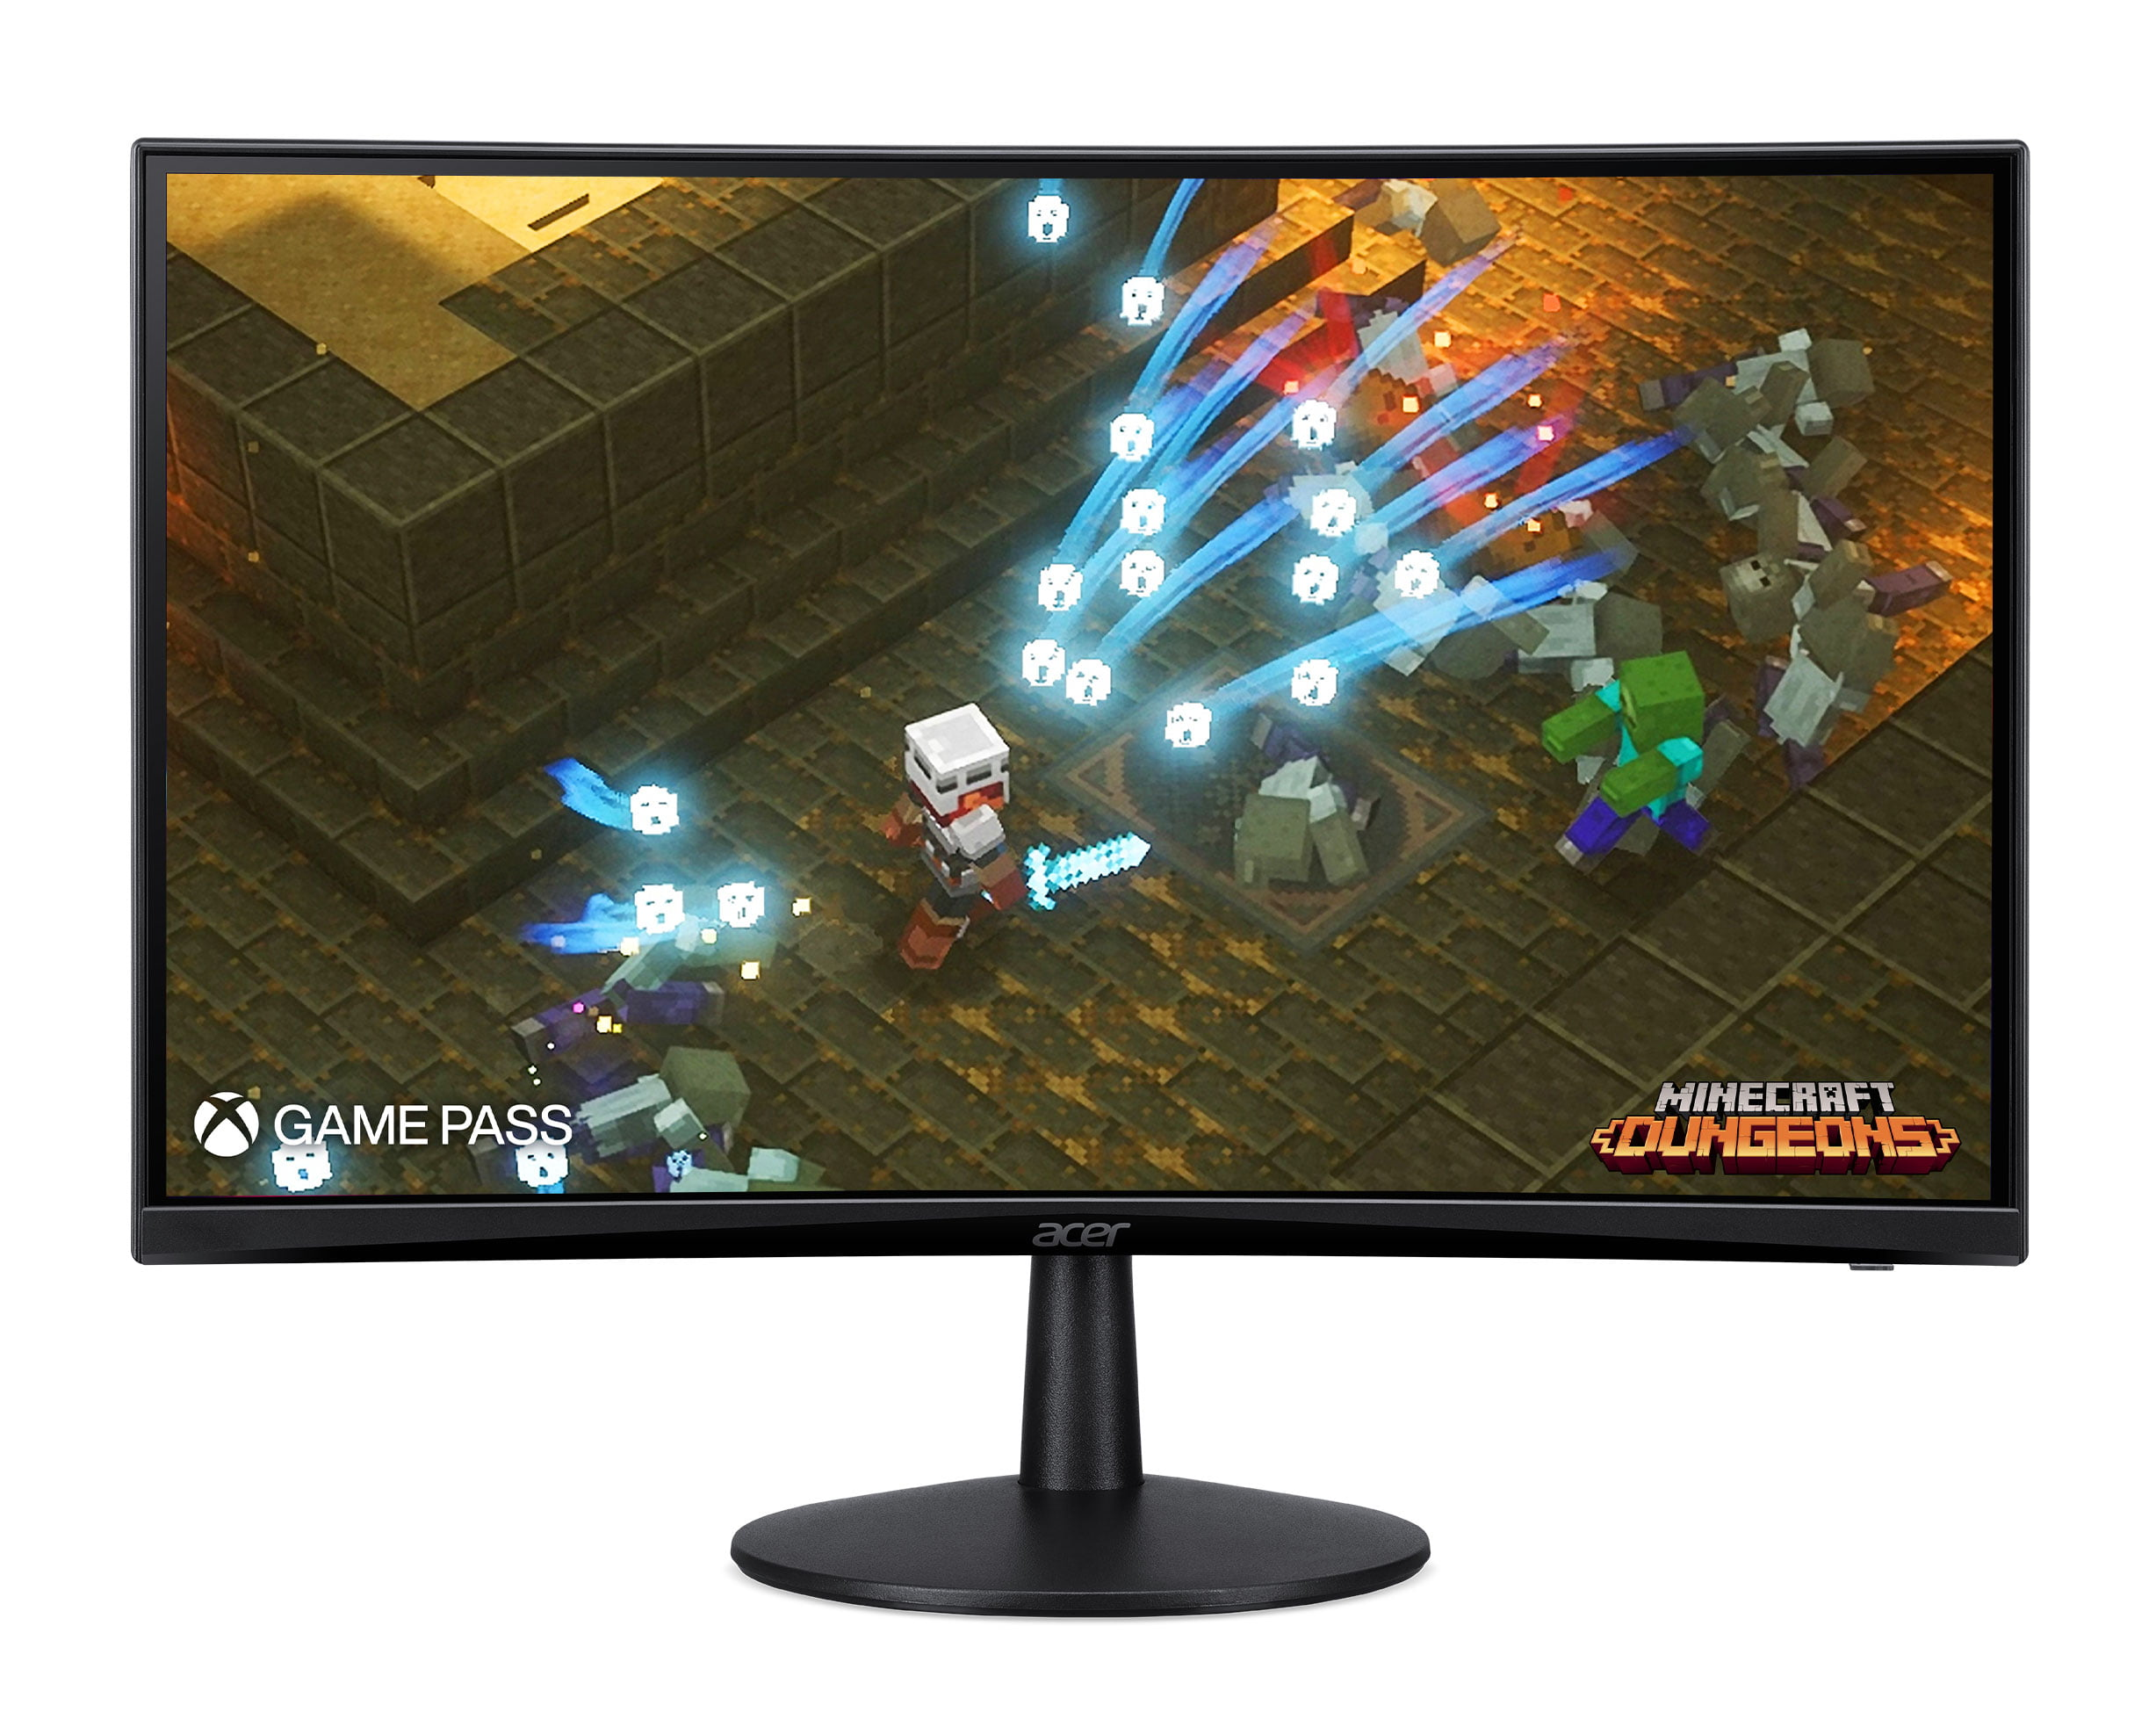 Acer Nitro 23.6" inch Curved Full HD Gaming Monitor -  (ED240Q Sbiip) - Walmart.com $119.00